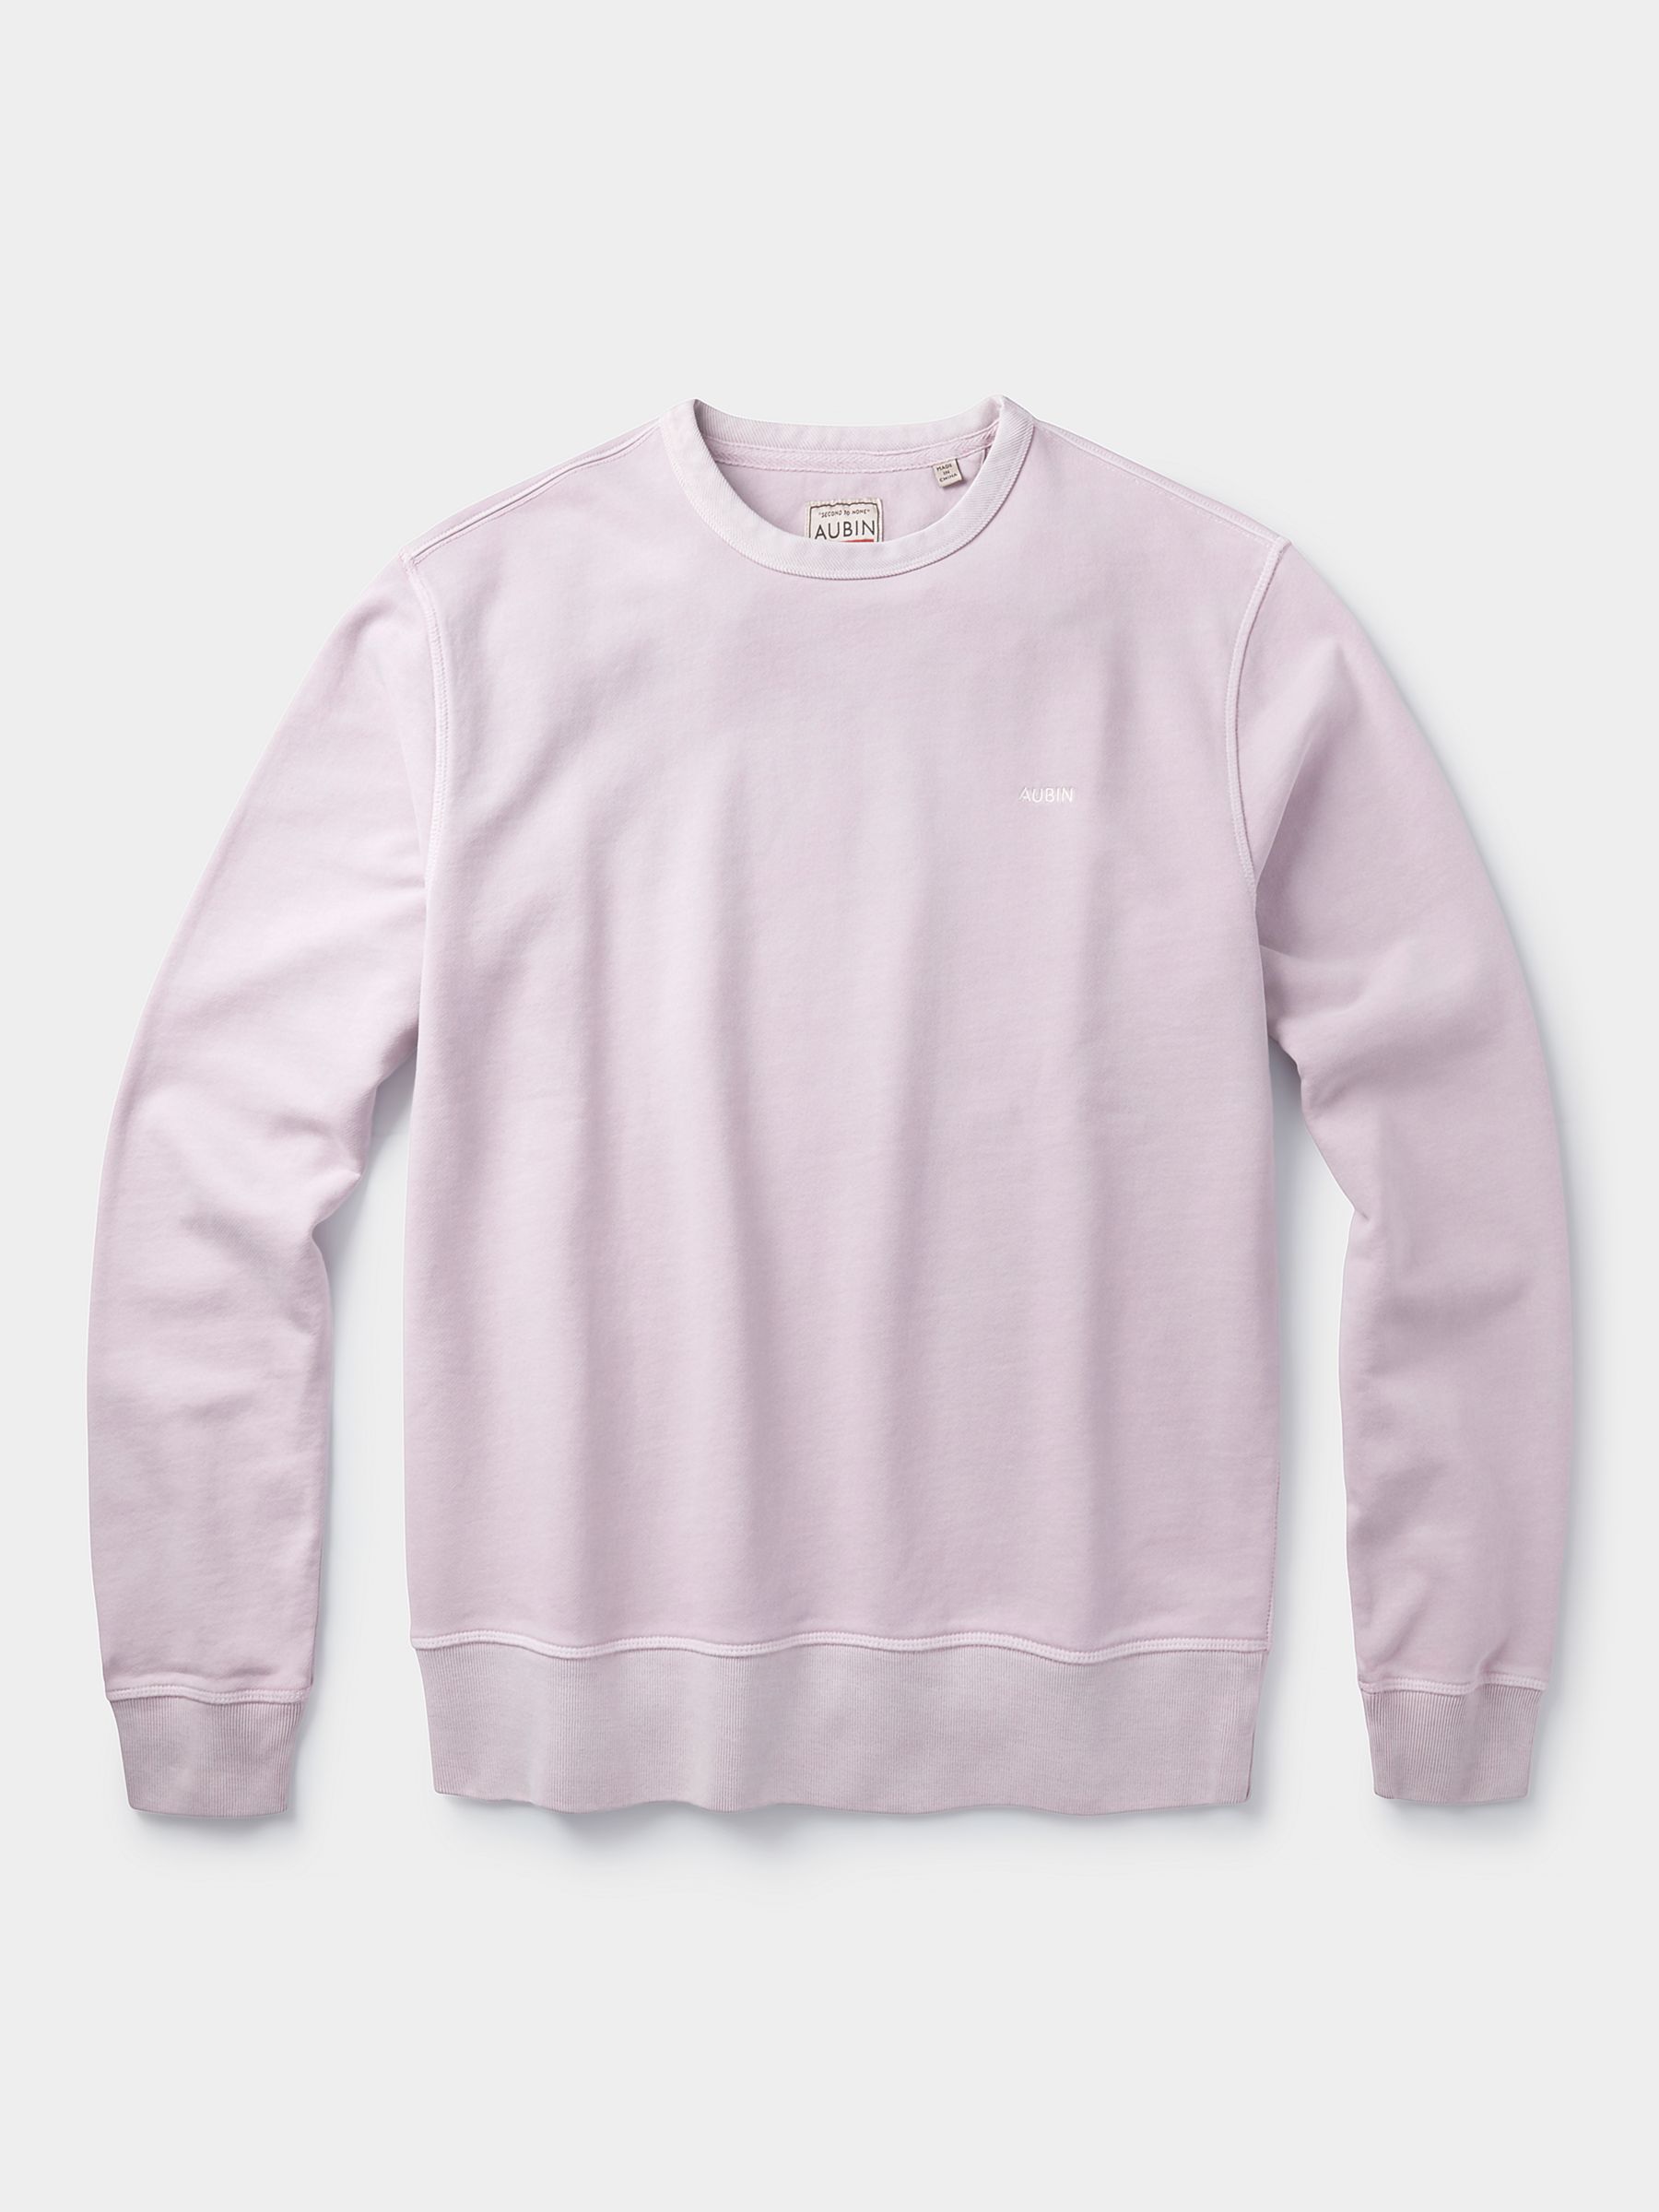 Aubin Vestry Crew Neck Cotton Sweatshirt, Washed Lilac, XS